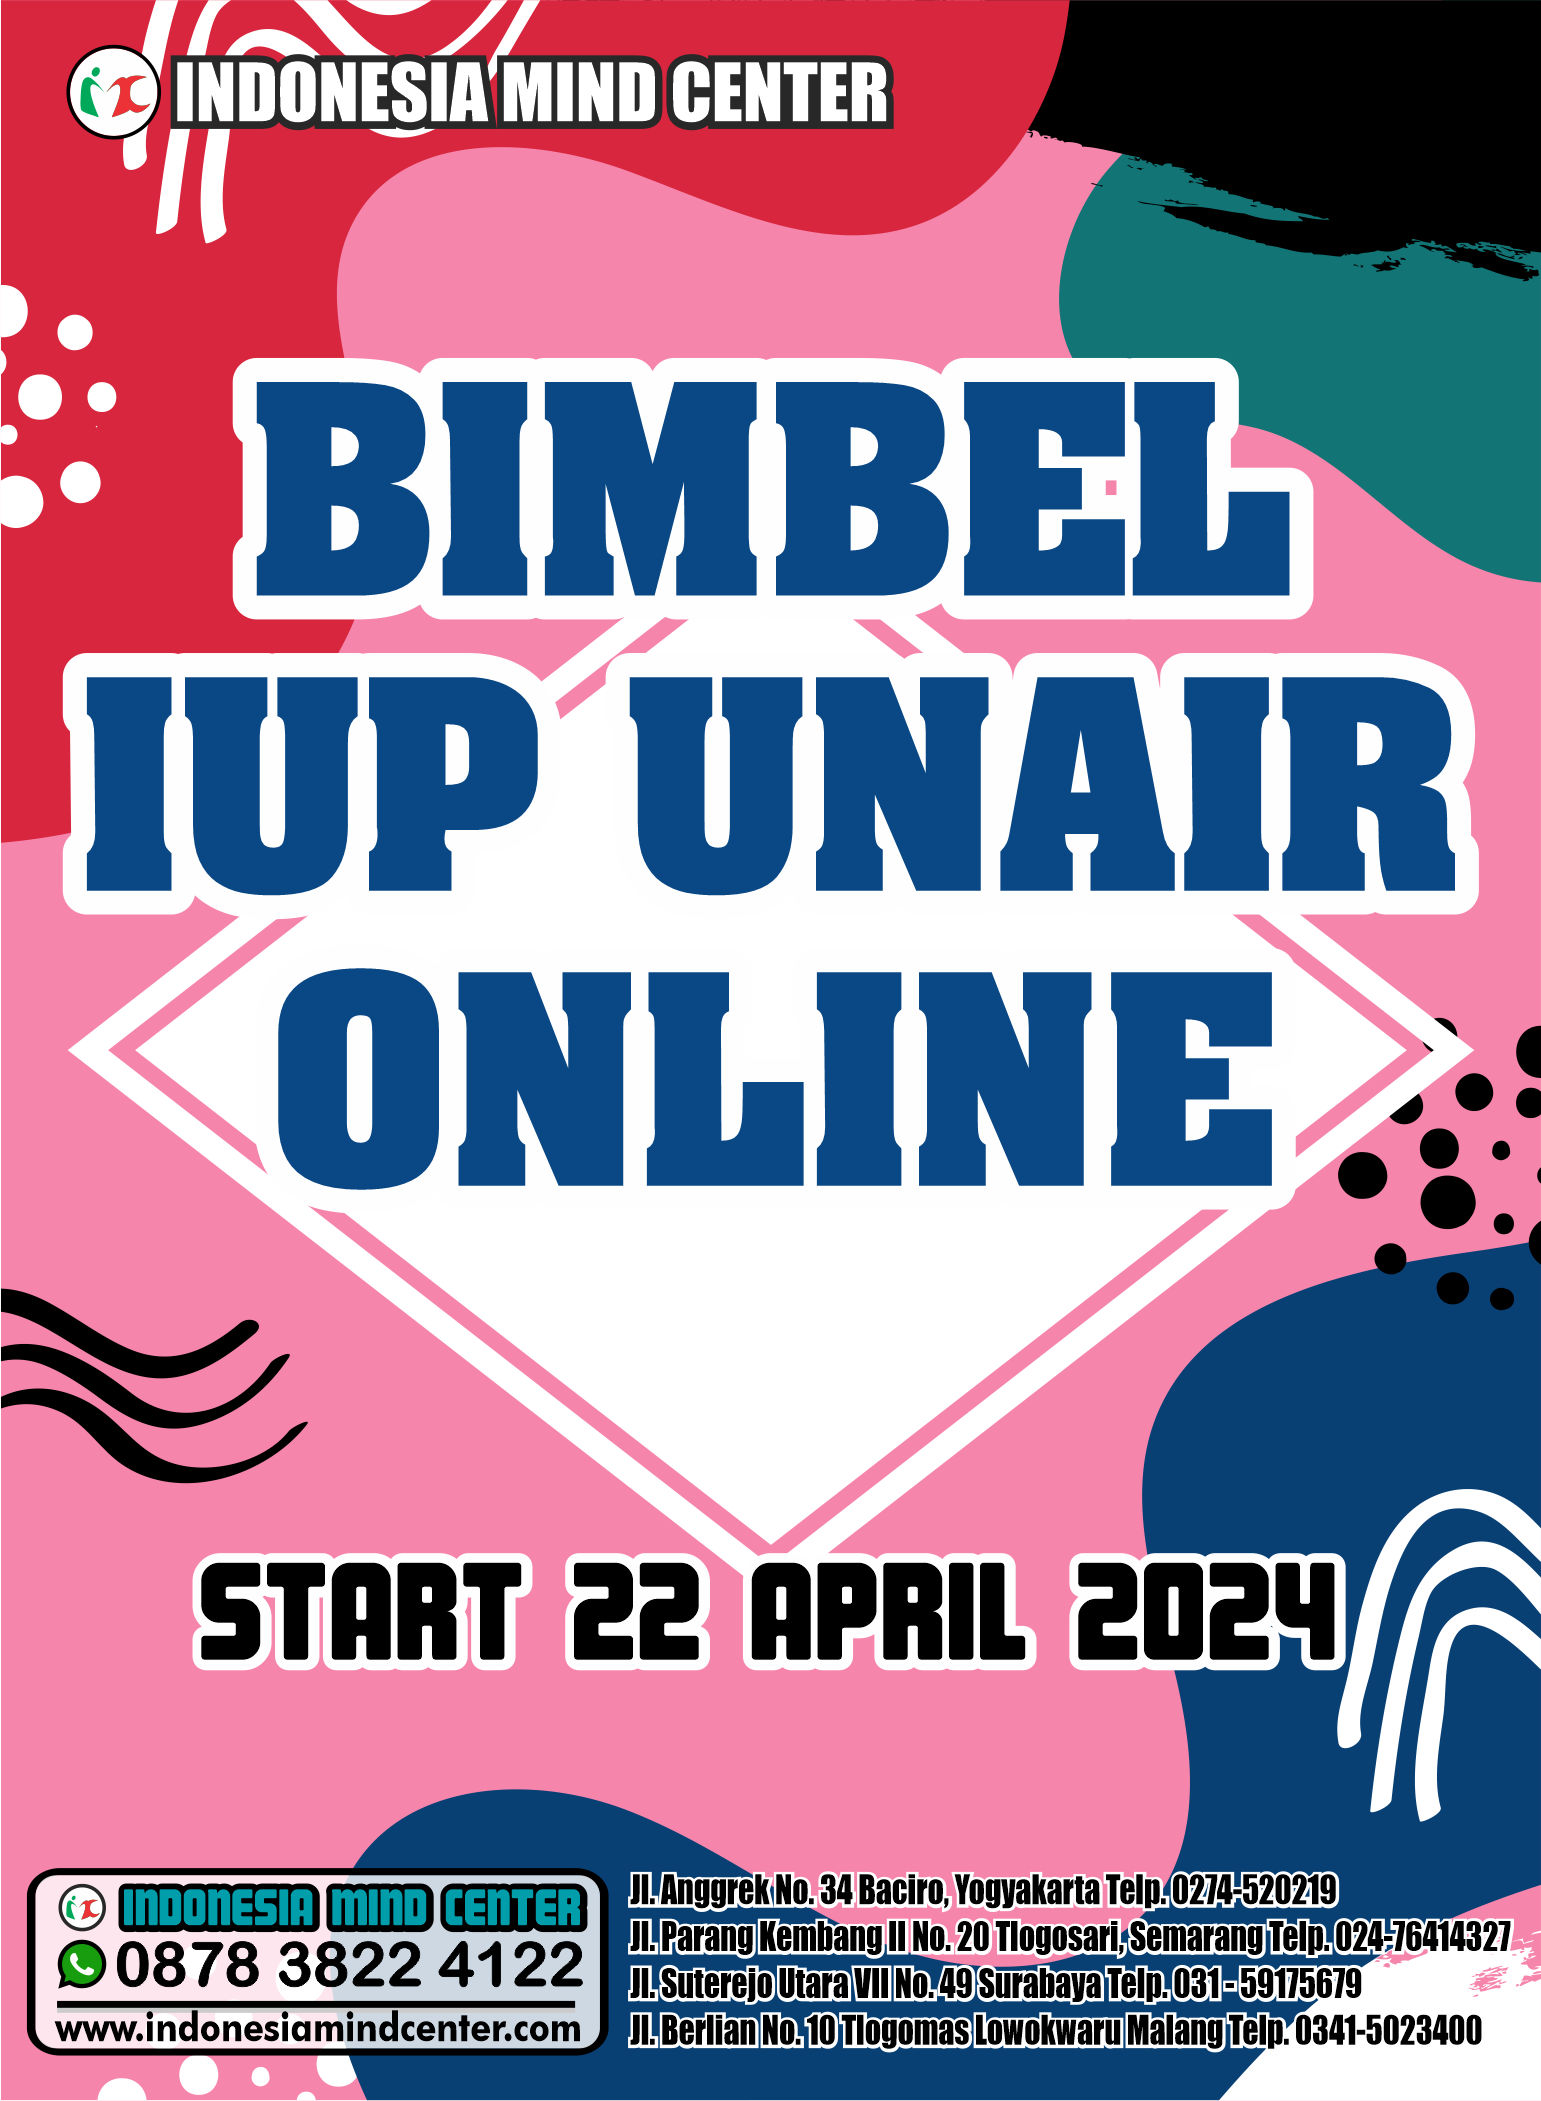 BIMBEL IUP UNAIR ONLINE START 22 APRIL 2024